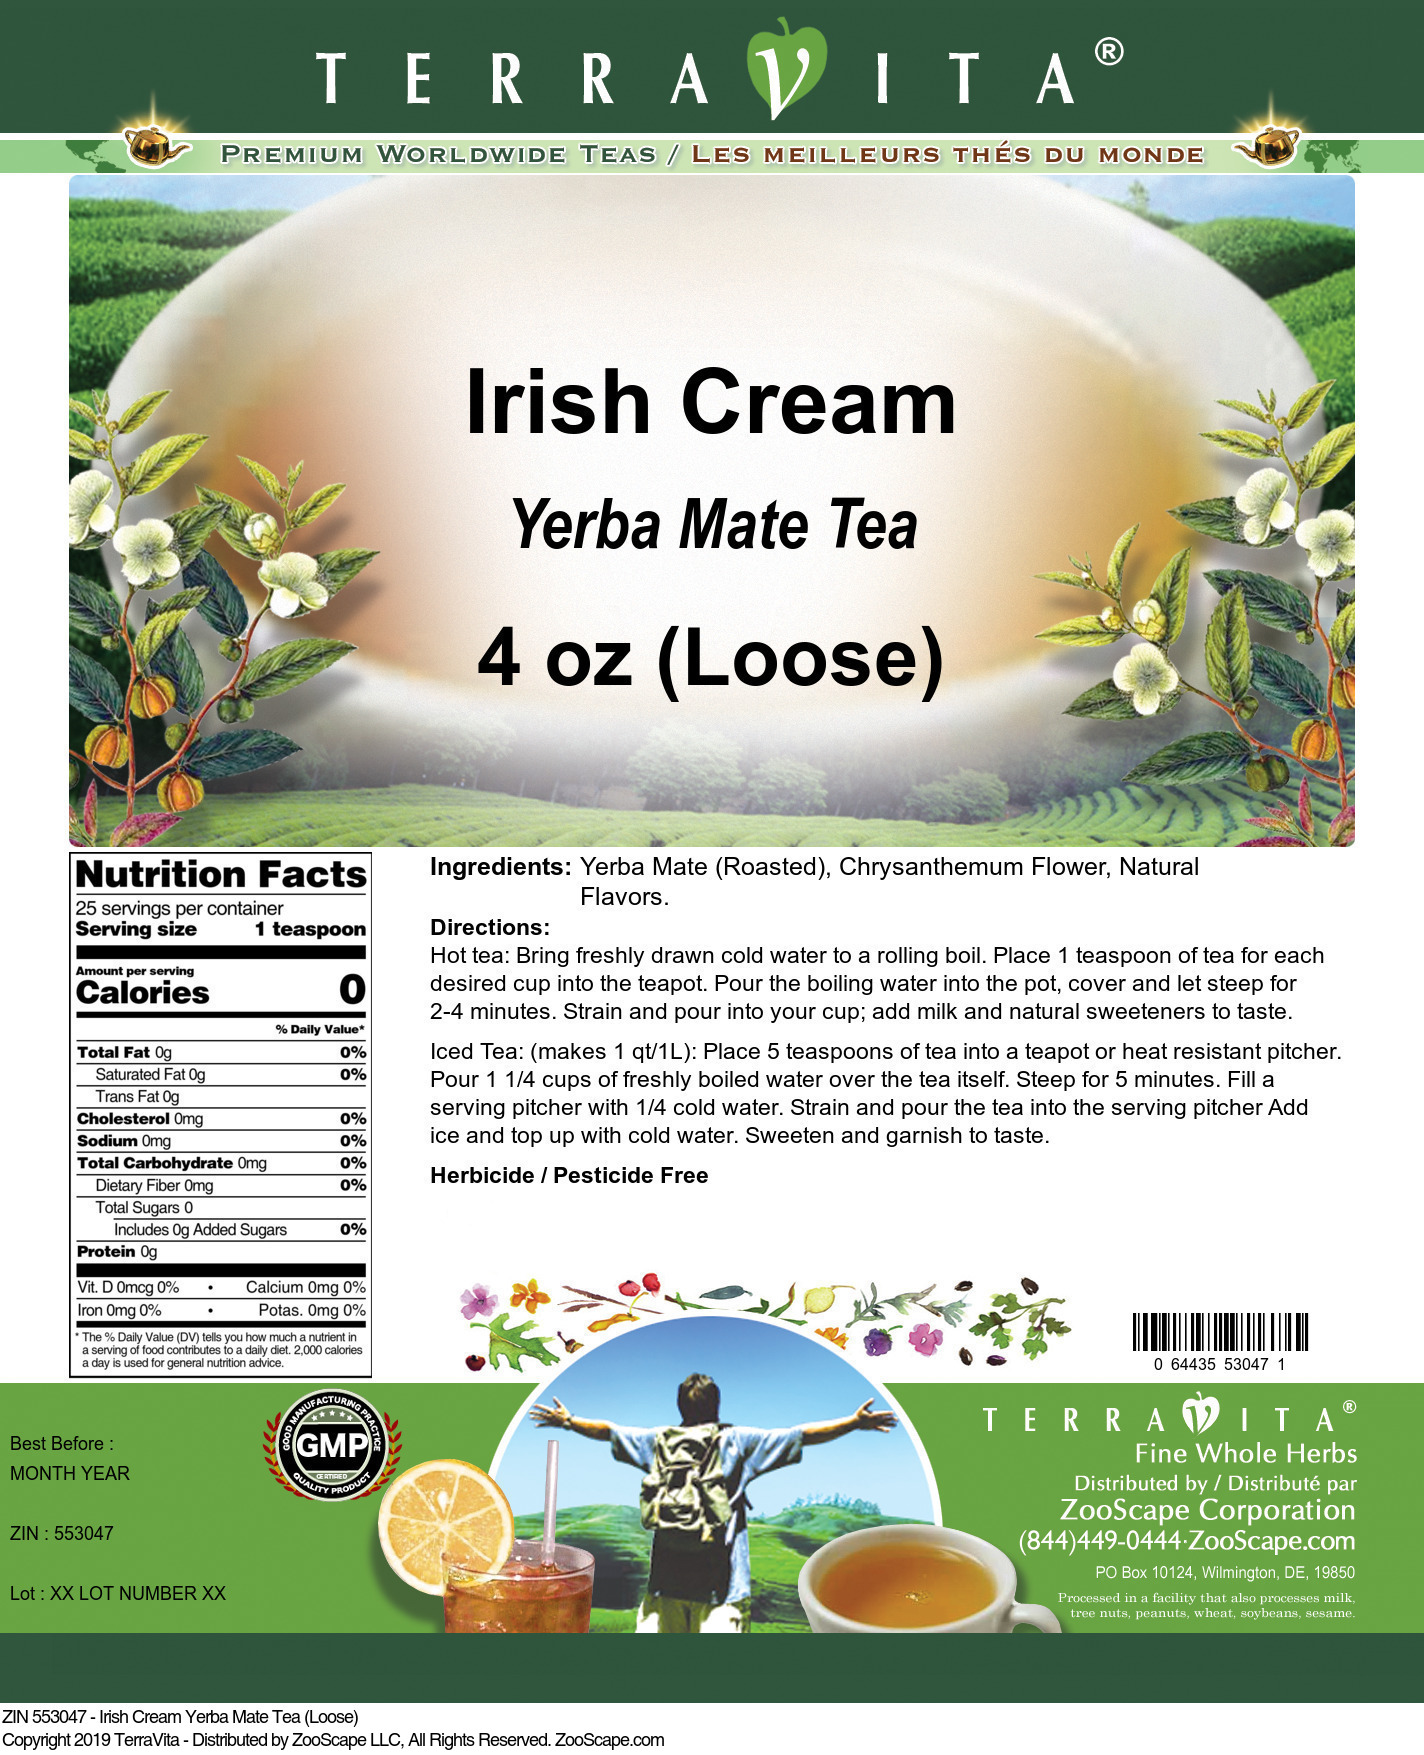 Irish Cream Yerba Mate Tea (Loose) - Label